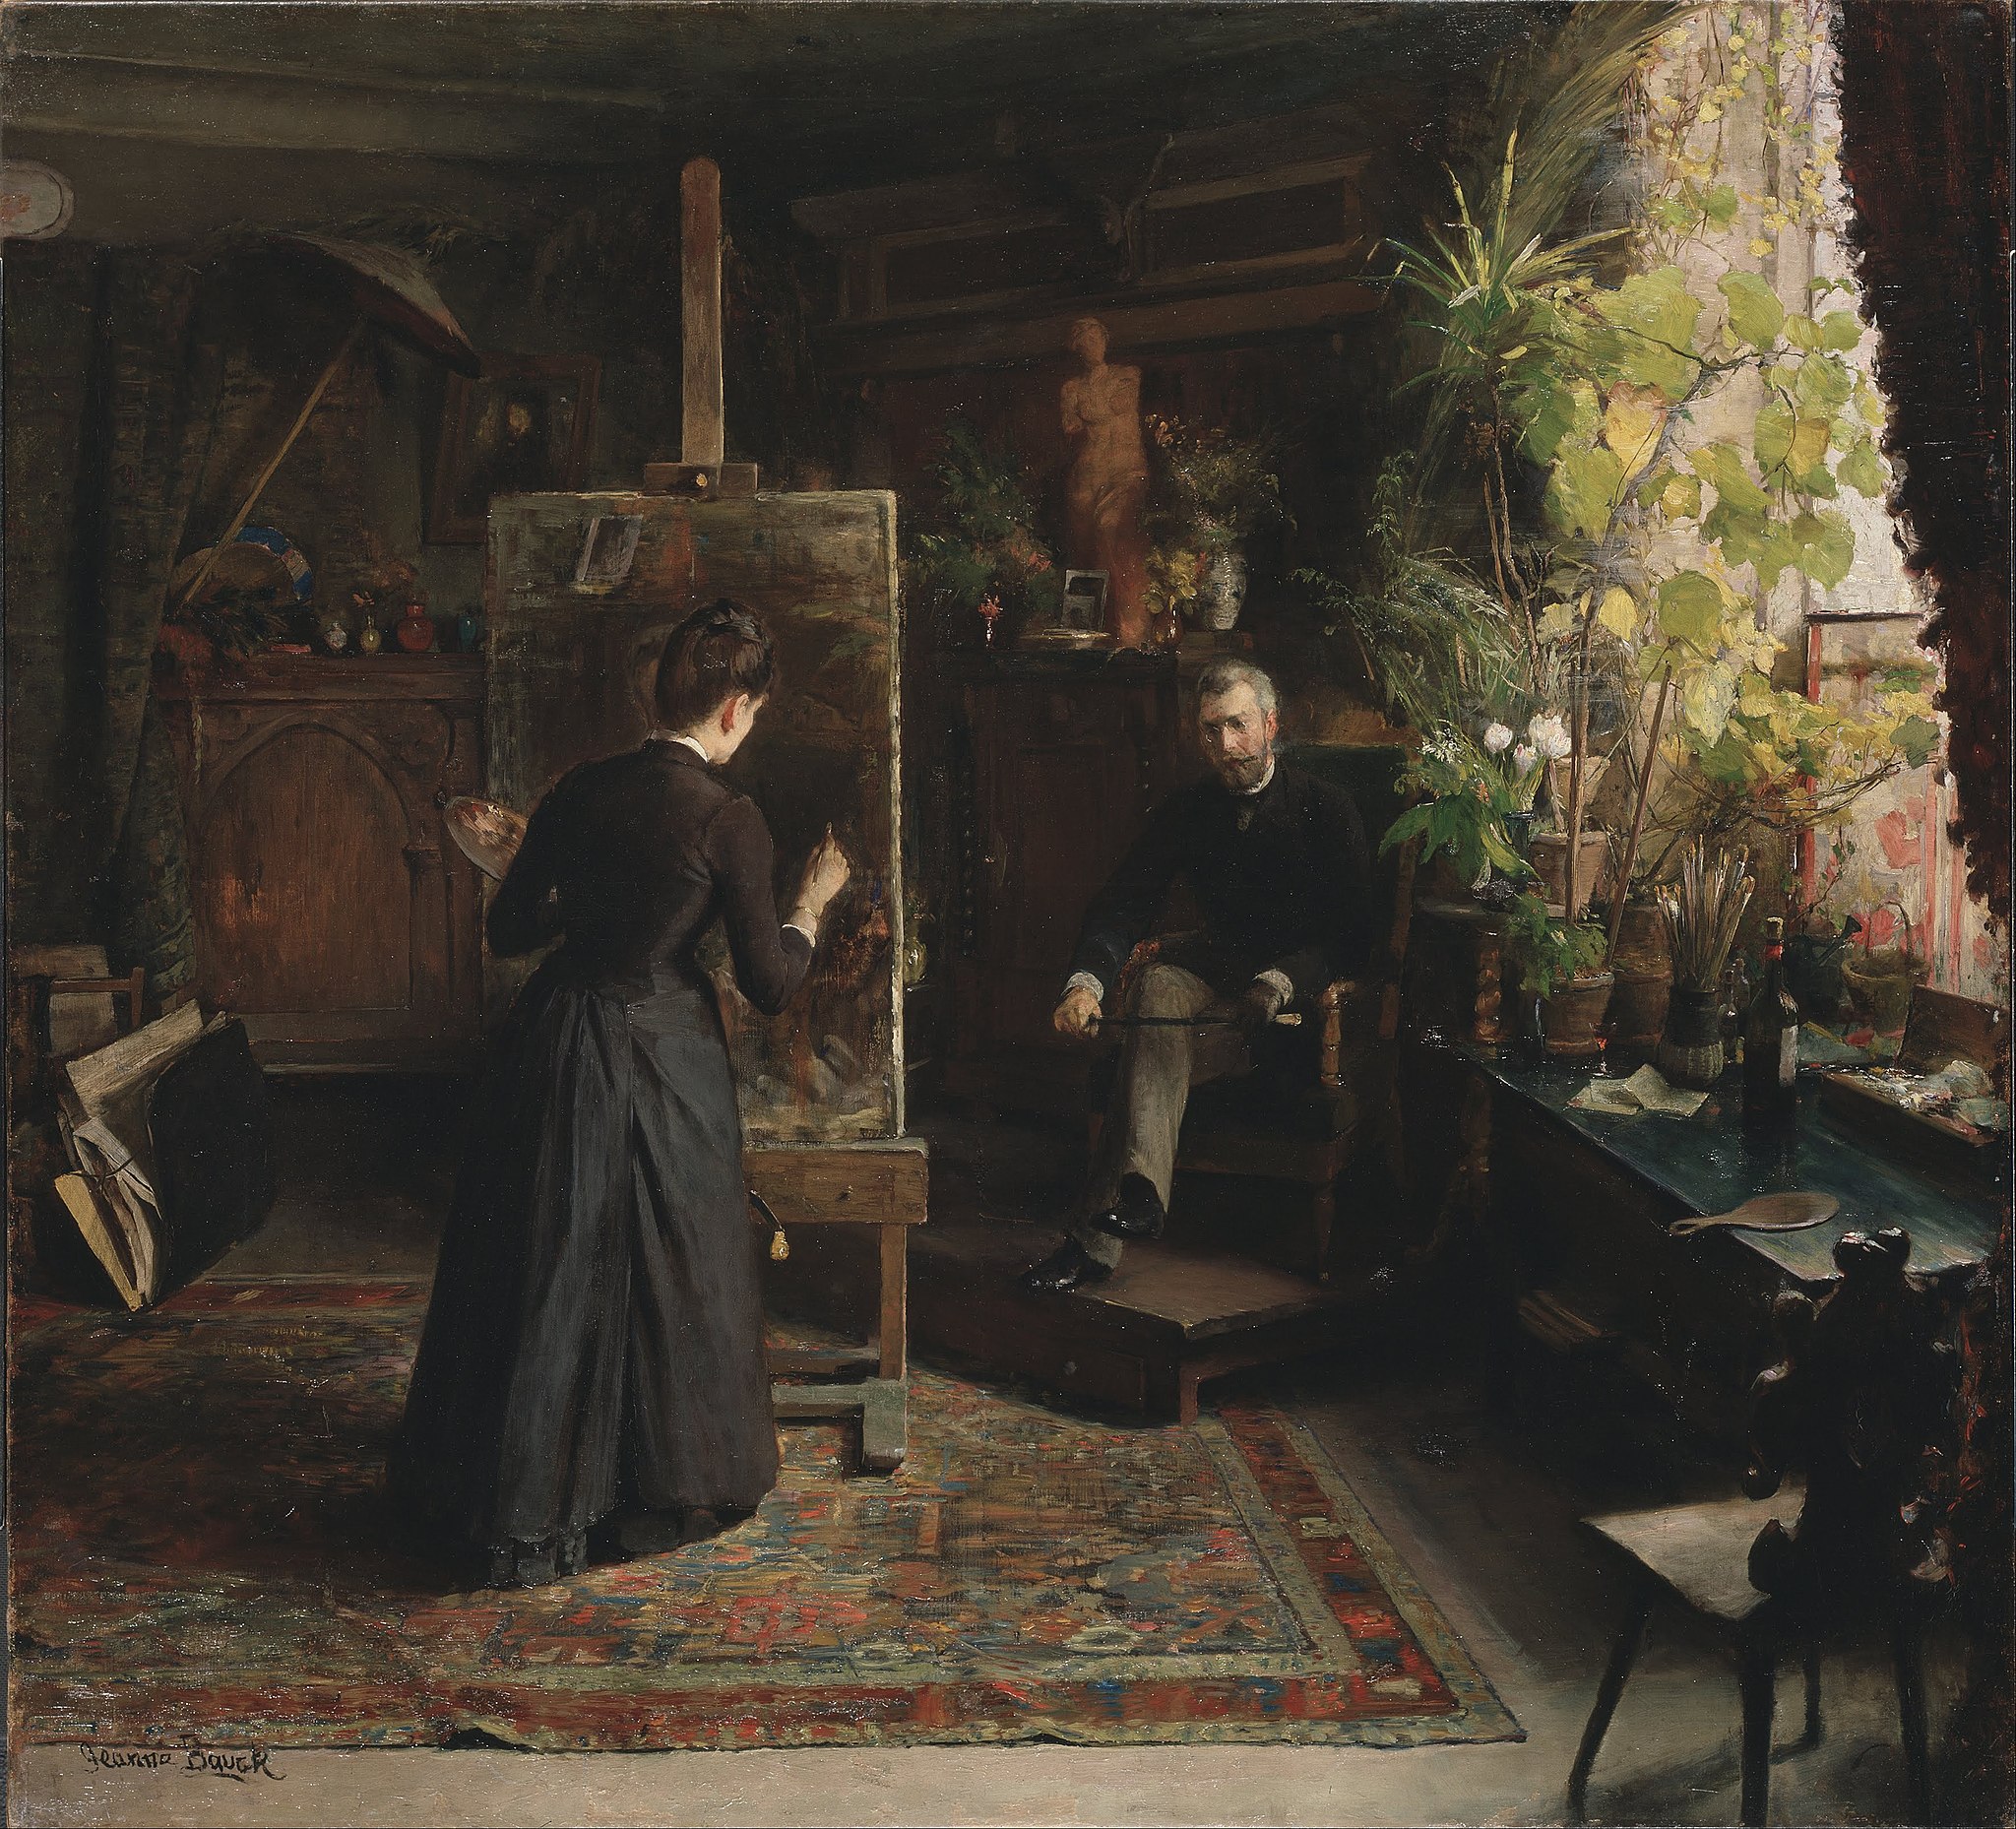 Данська художниця Берта Вегманн пише портрет by Jeanna Bauck - 1870-80 - 100 x 110 см 